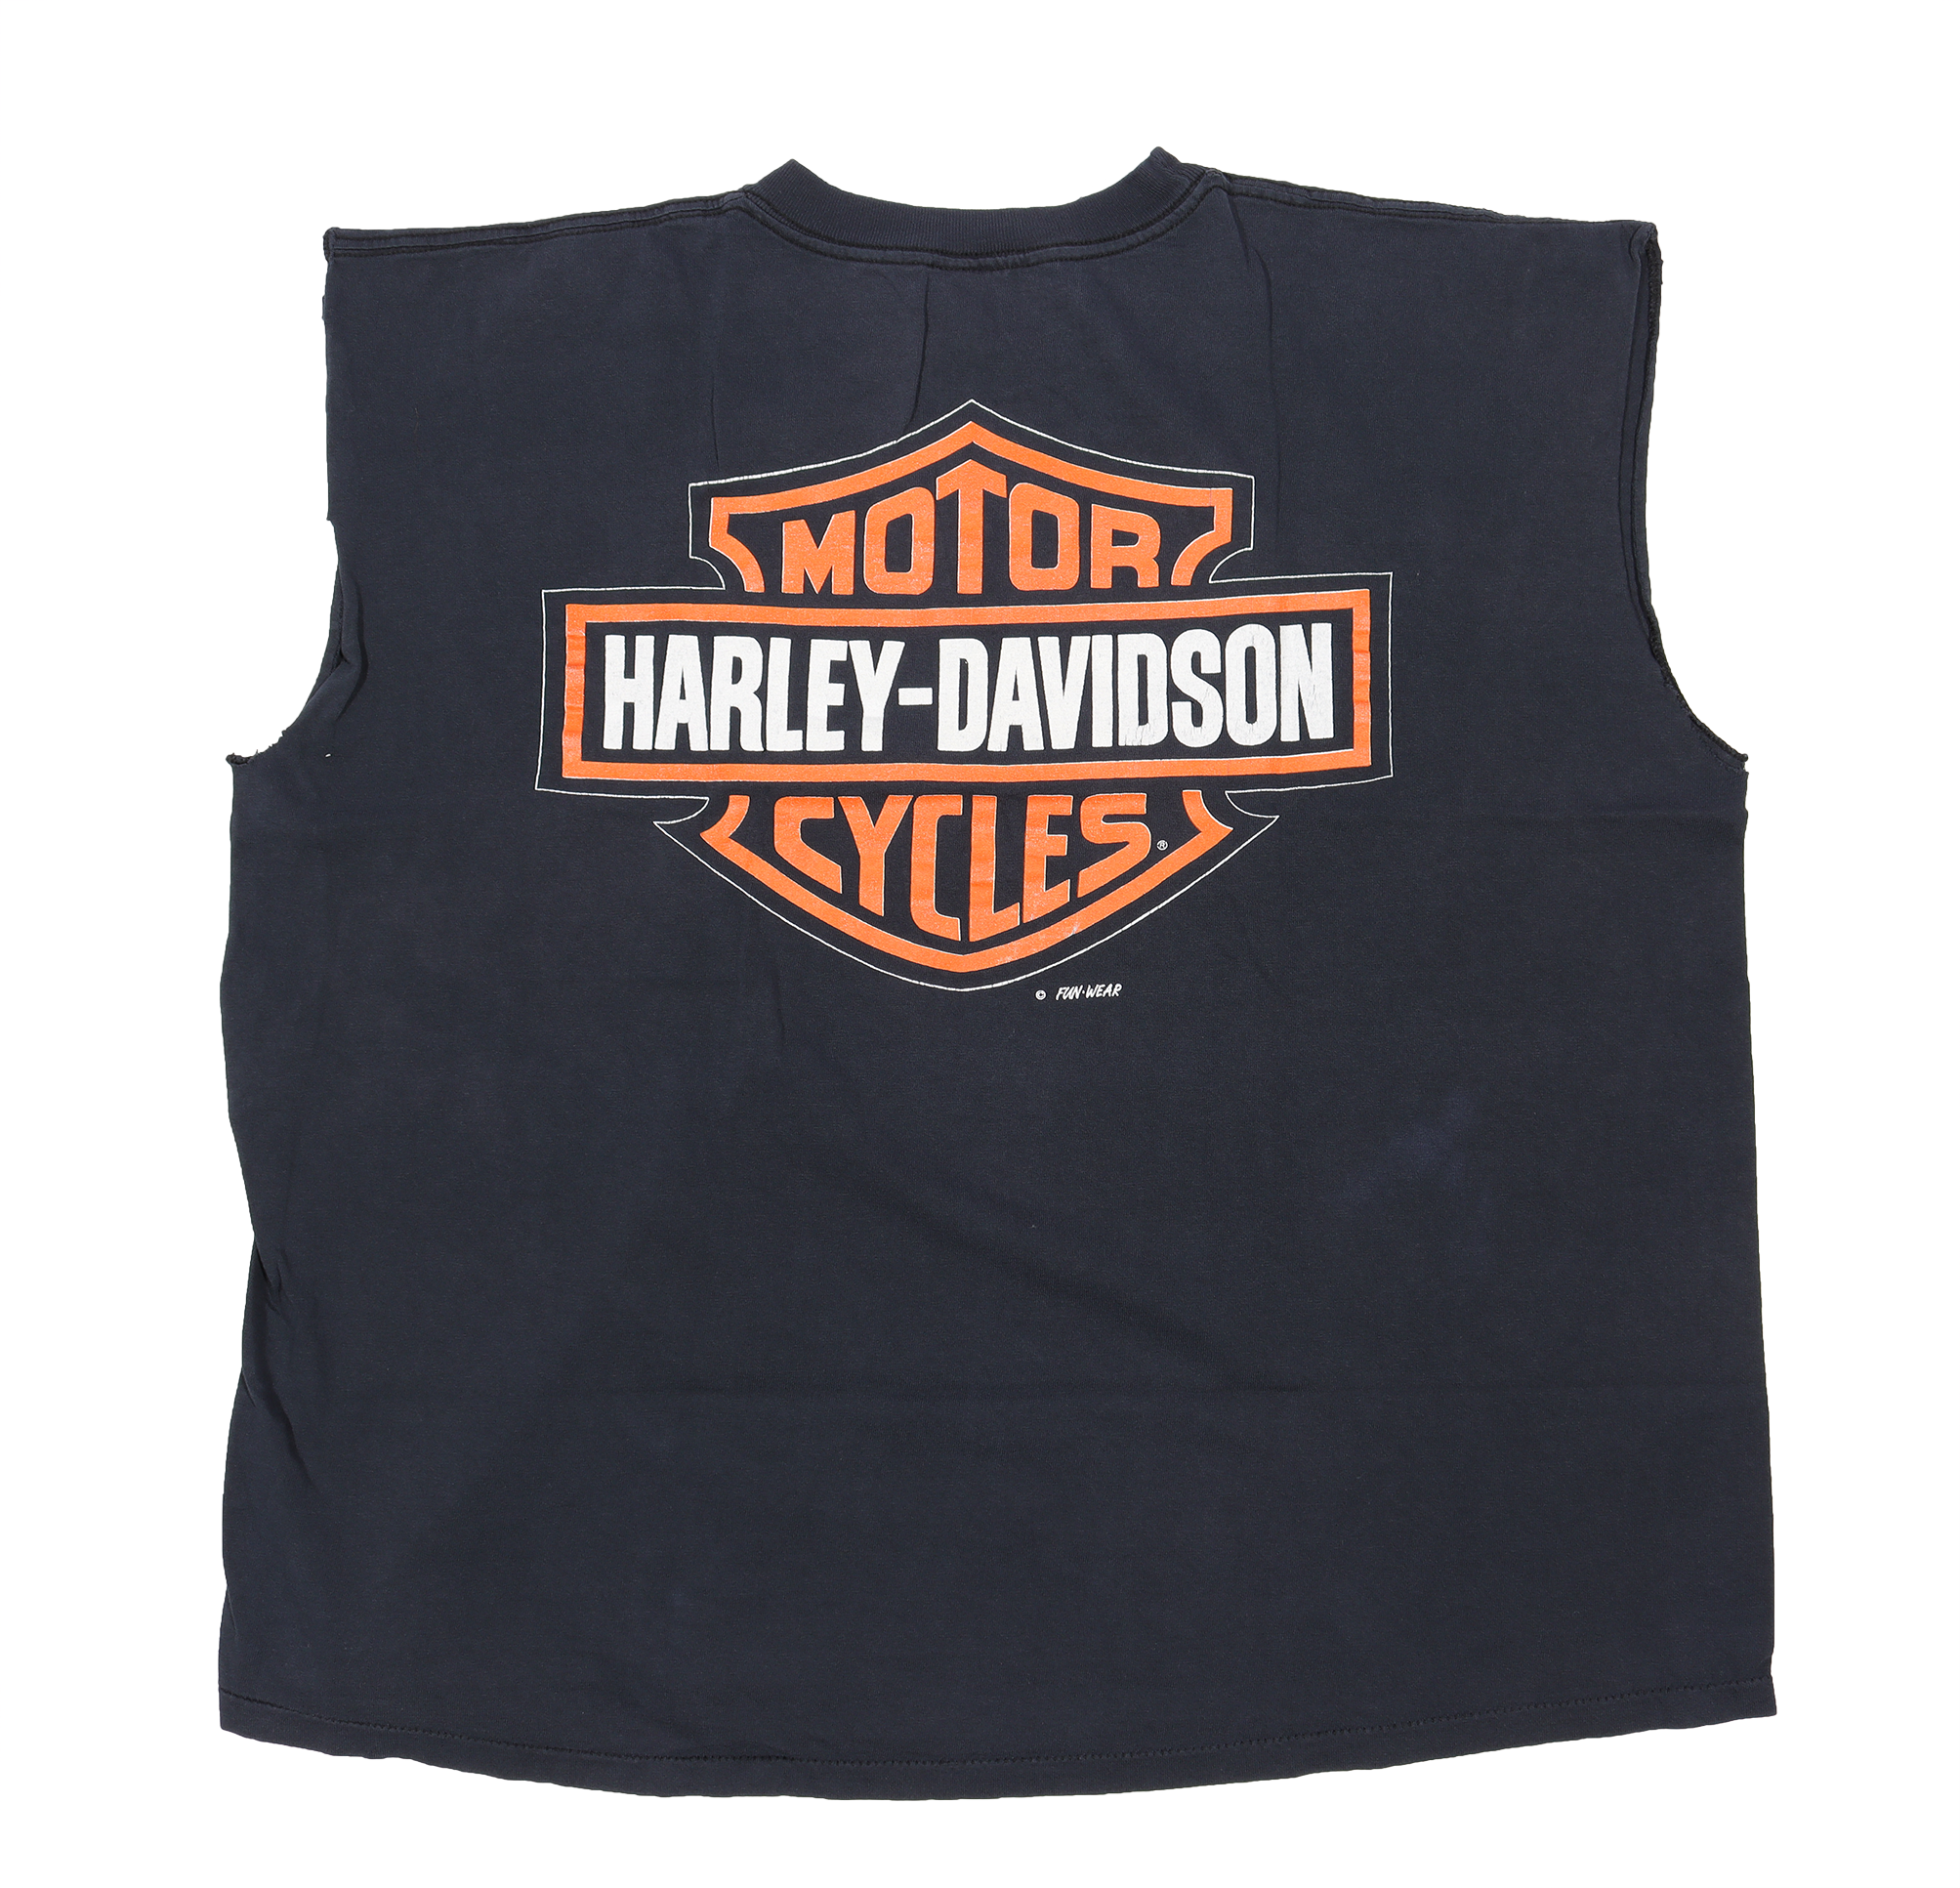 Streak Lightning Harley Davidson Cut Off T-Shirt